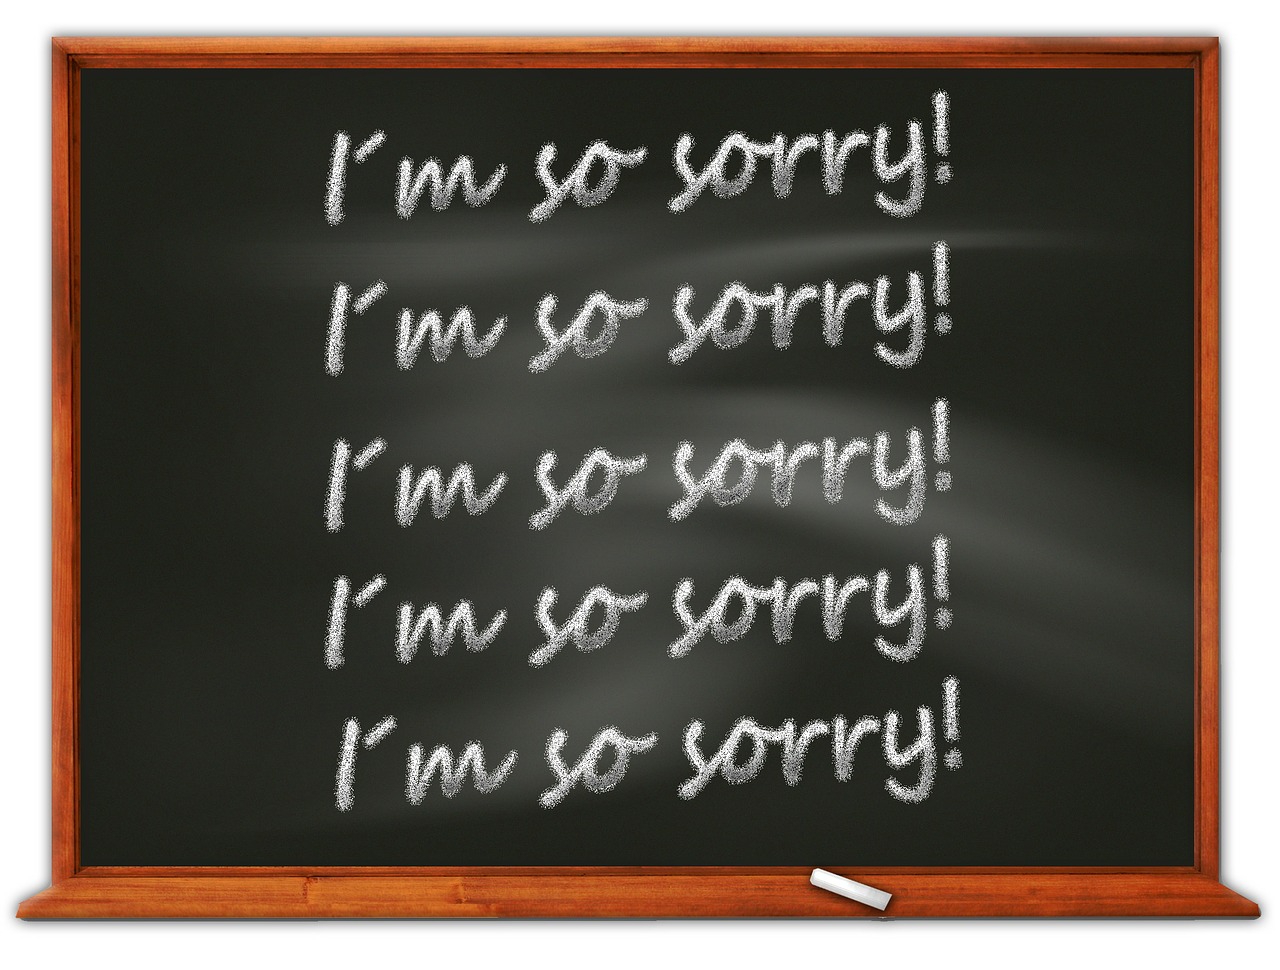 Blackboard with "I'm so sorry"